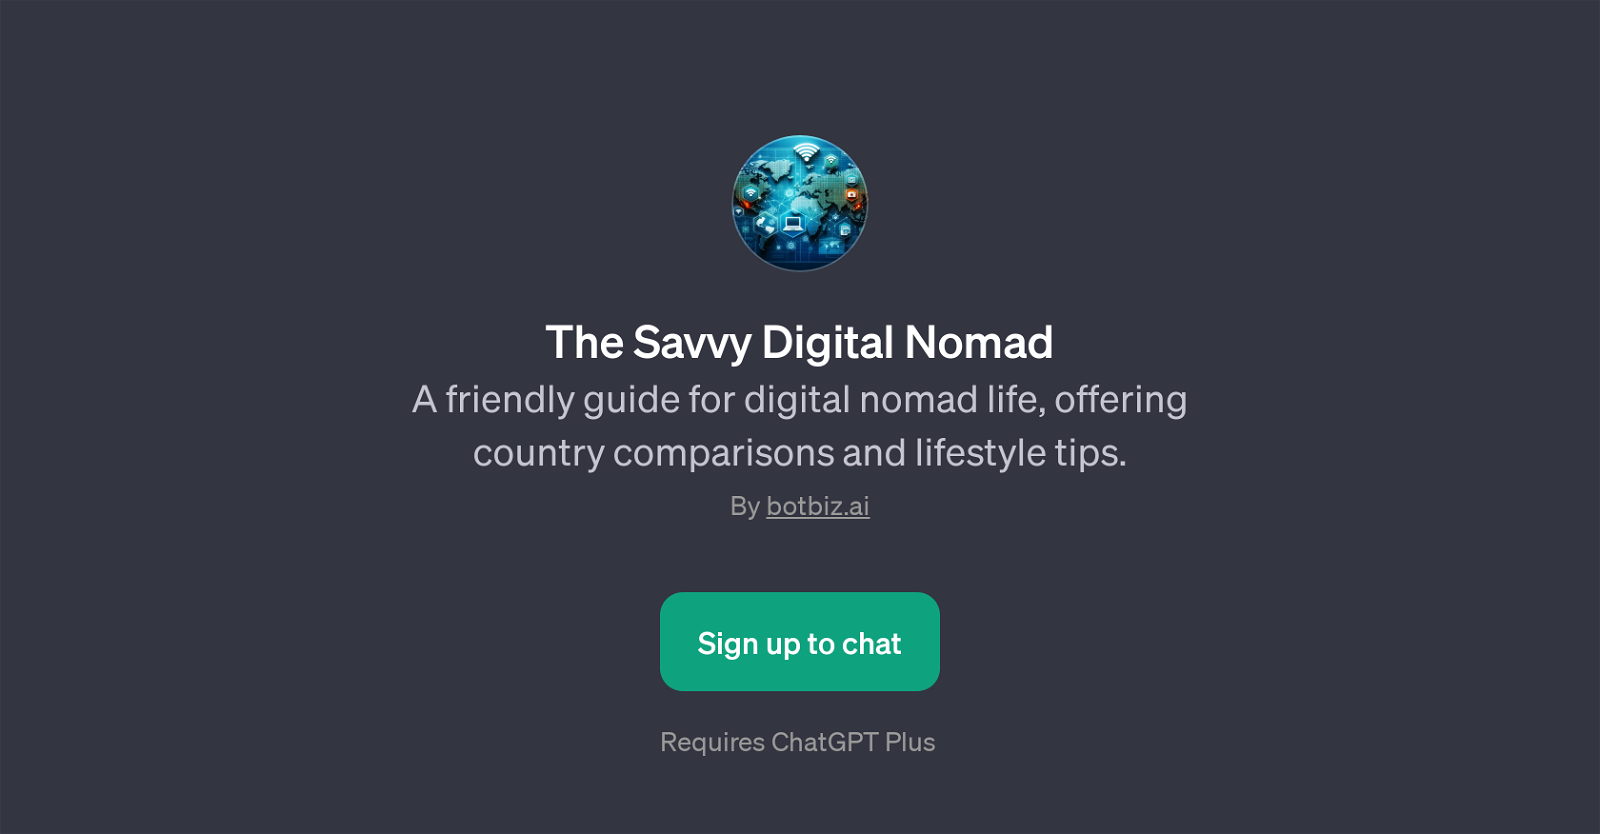 The Savvy Digital Nomad website